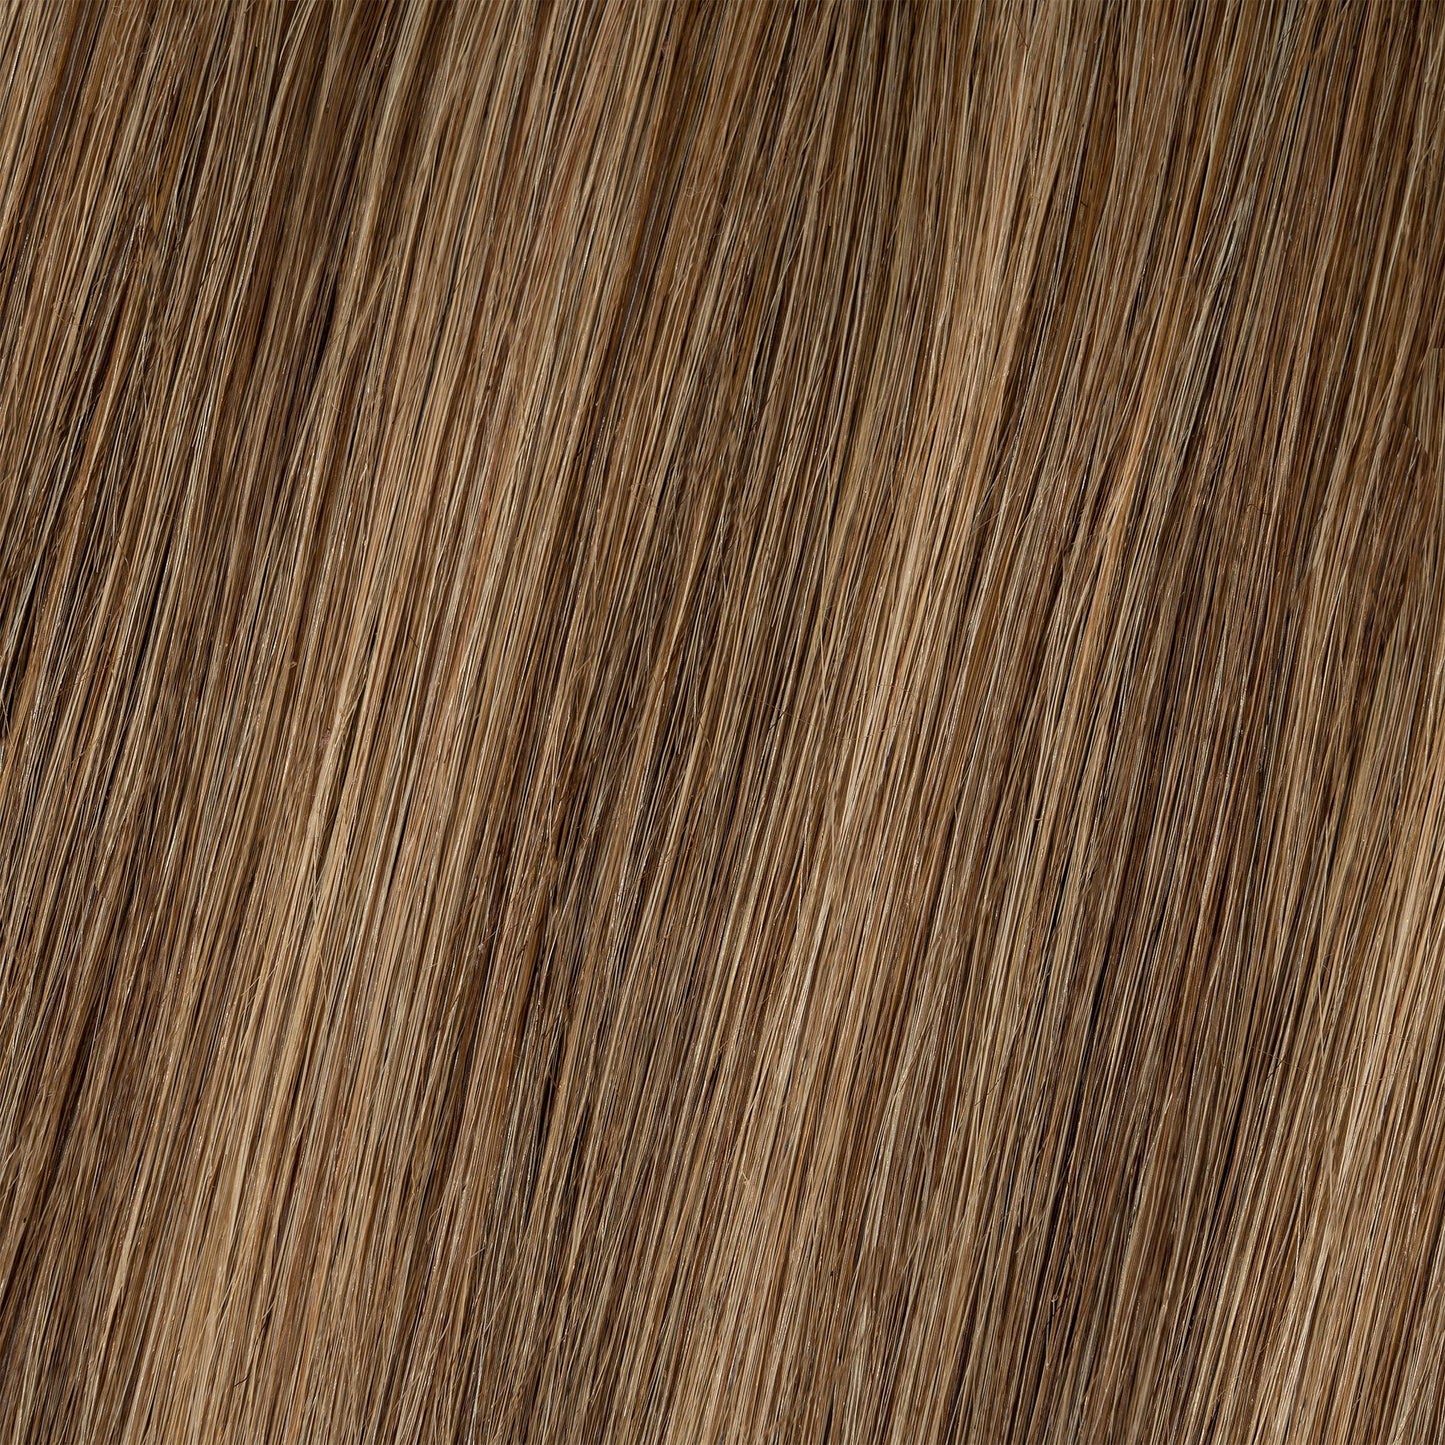 Brown Honey Blonde Highlighted Thinning Hair Fill-Ins segohair.com